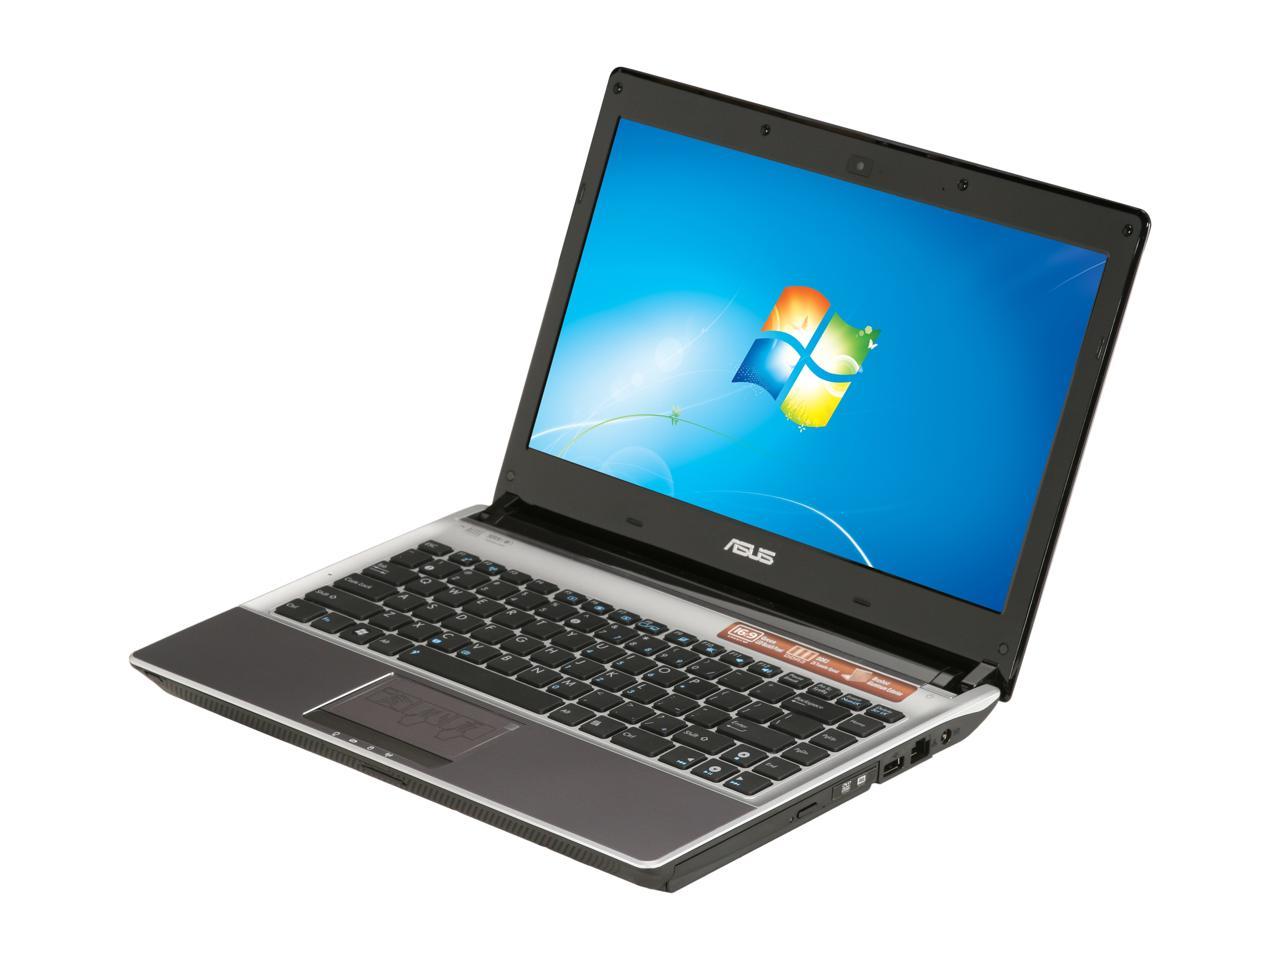 CWK Long Life Replacement Laptop Notebook Battery for Asus U30Jc-B1 U30Jc-B2B U30Jc-Qhda1-A1 6C U30Jc-B2B U30Jc-Qhda1-A1 U30Jc-Qhda1-Cbil 6C U30Jc-Qx002V U30Jc-Qx007V U30Jc-Qx012X1